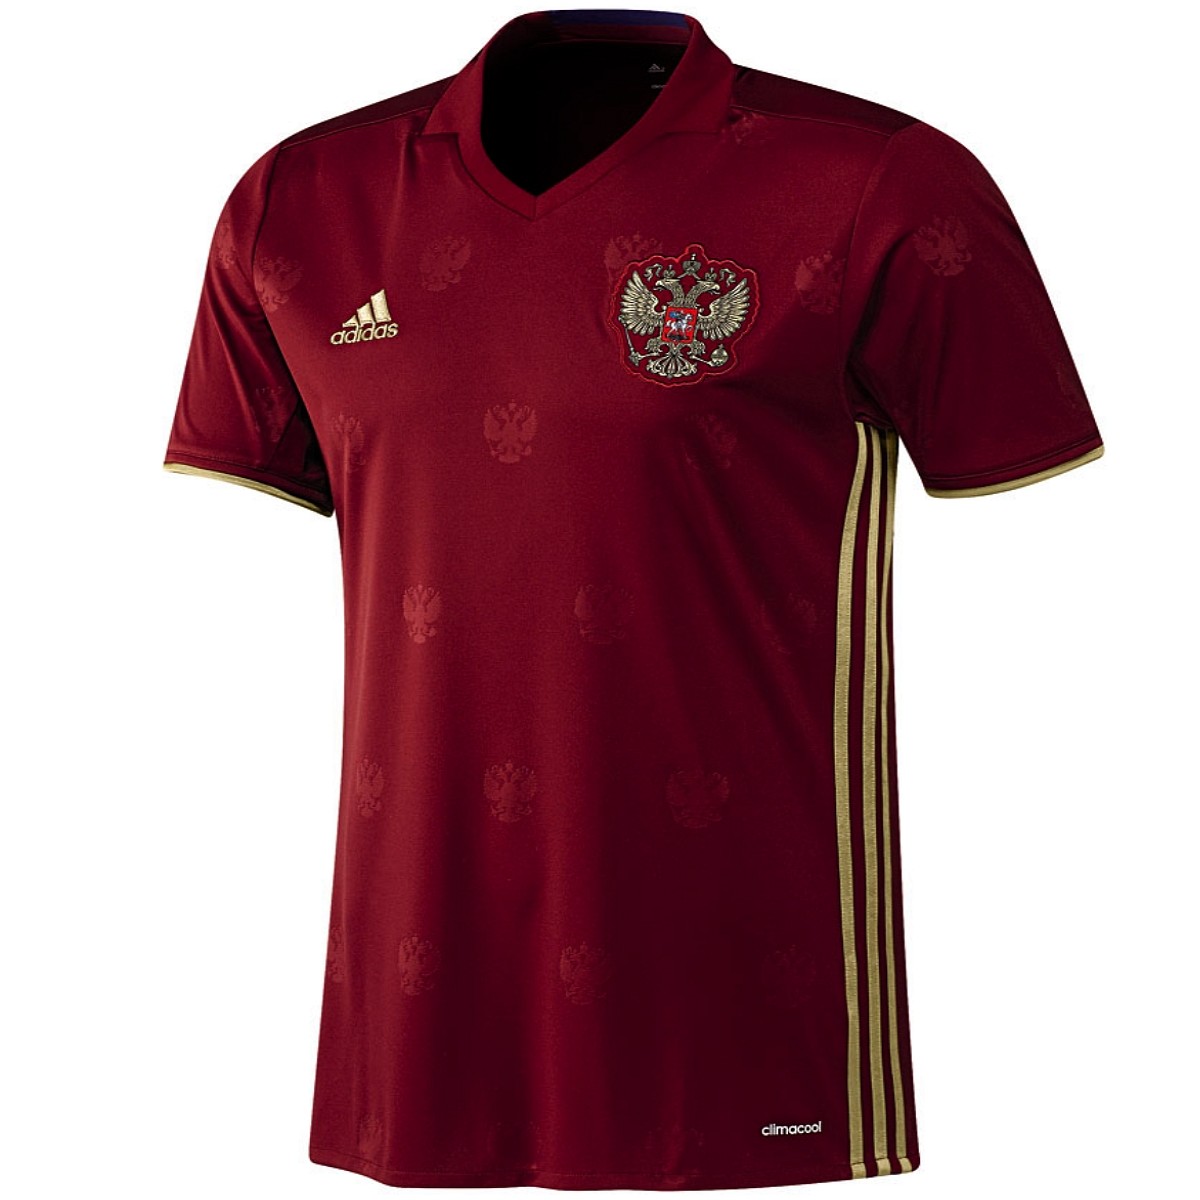 russia national football team jersey